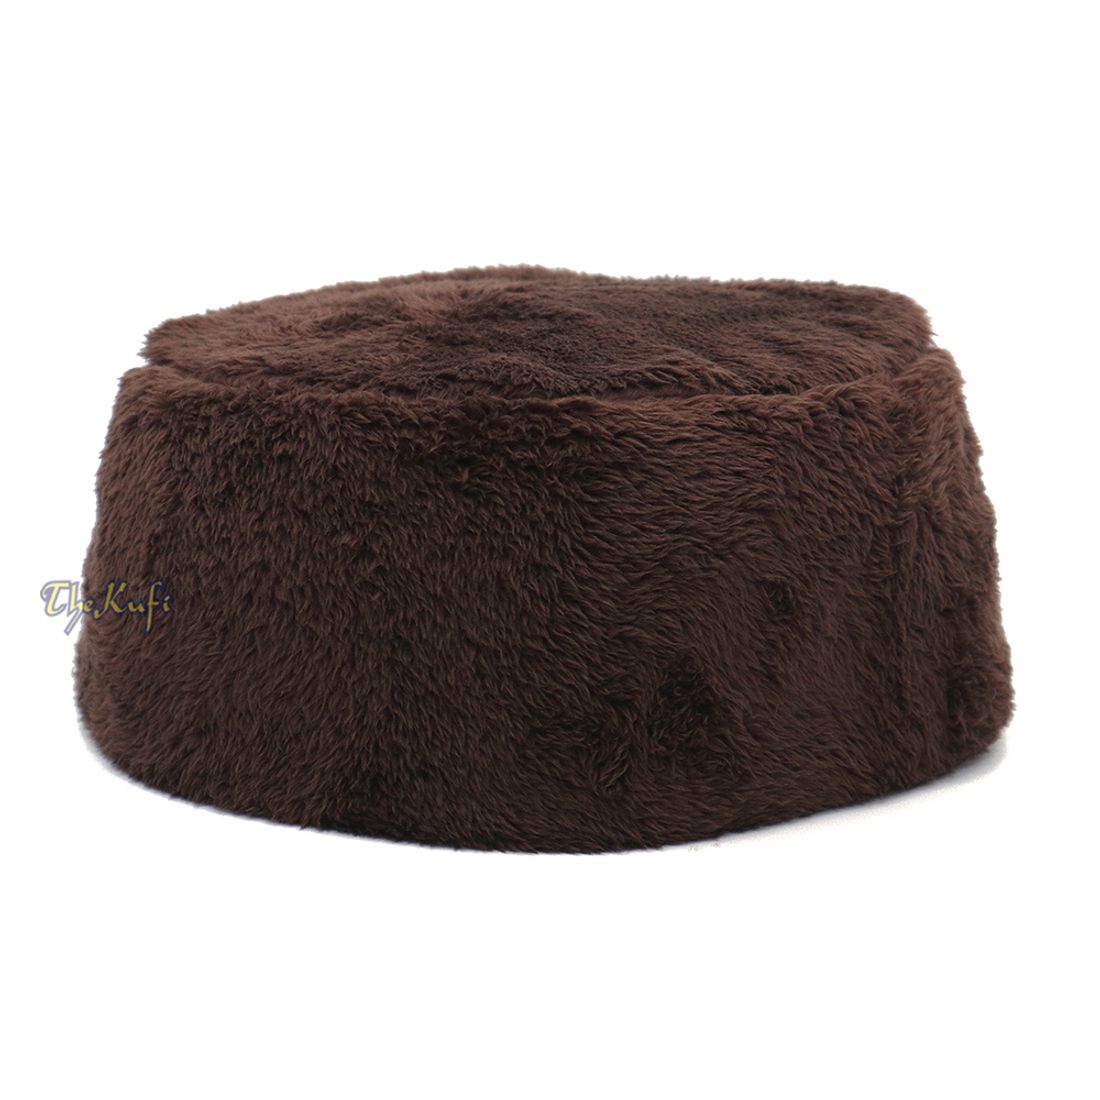 Dark Brown Winter Kufi Faux Fur Warm Chechen Uzbeki Style Islamic Hat Plush One-size Medium-large Stretchy 4-inch Tall Head Cover Muslim